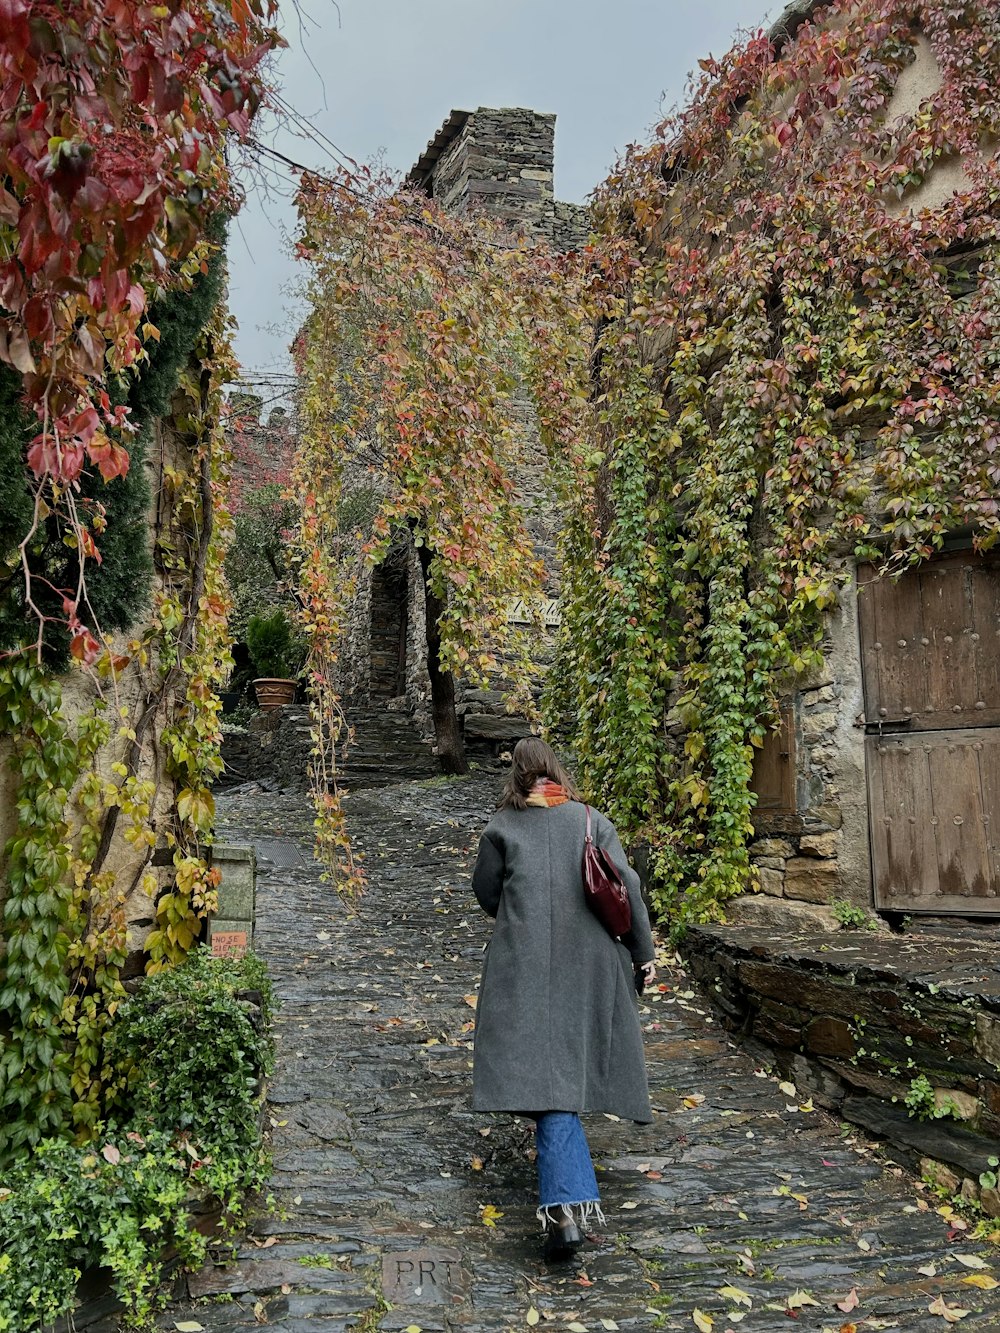 a woman is walking down a cobblestone street